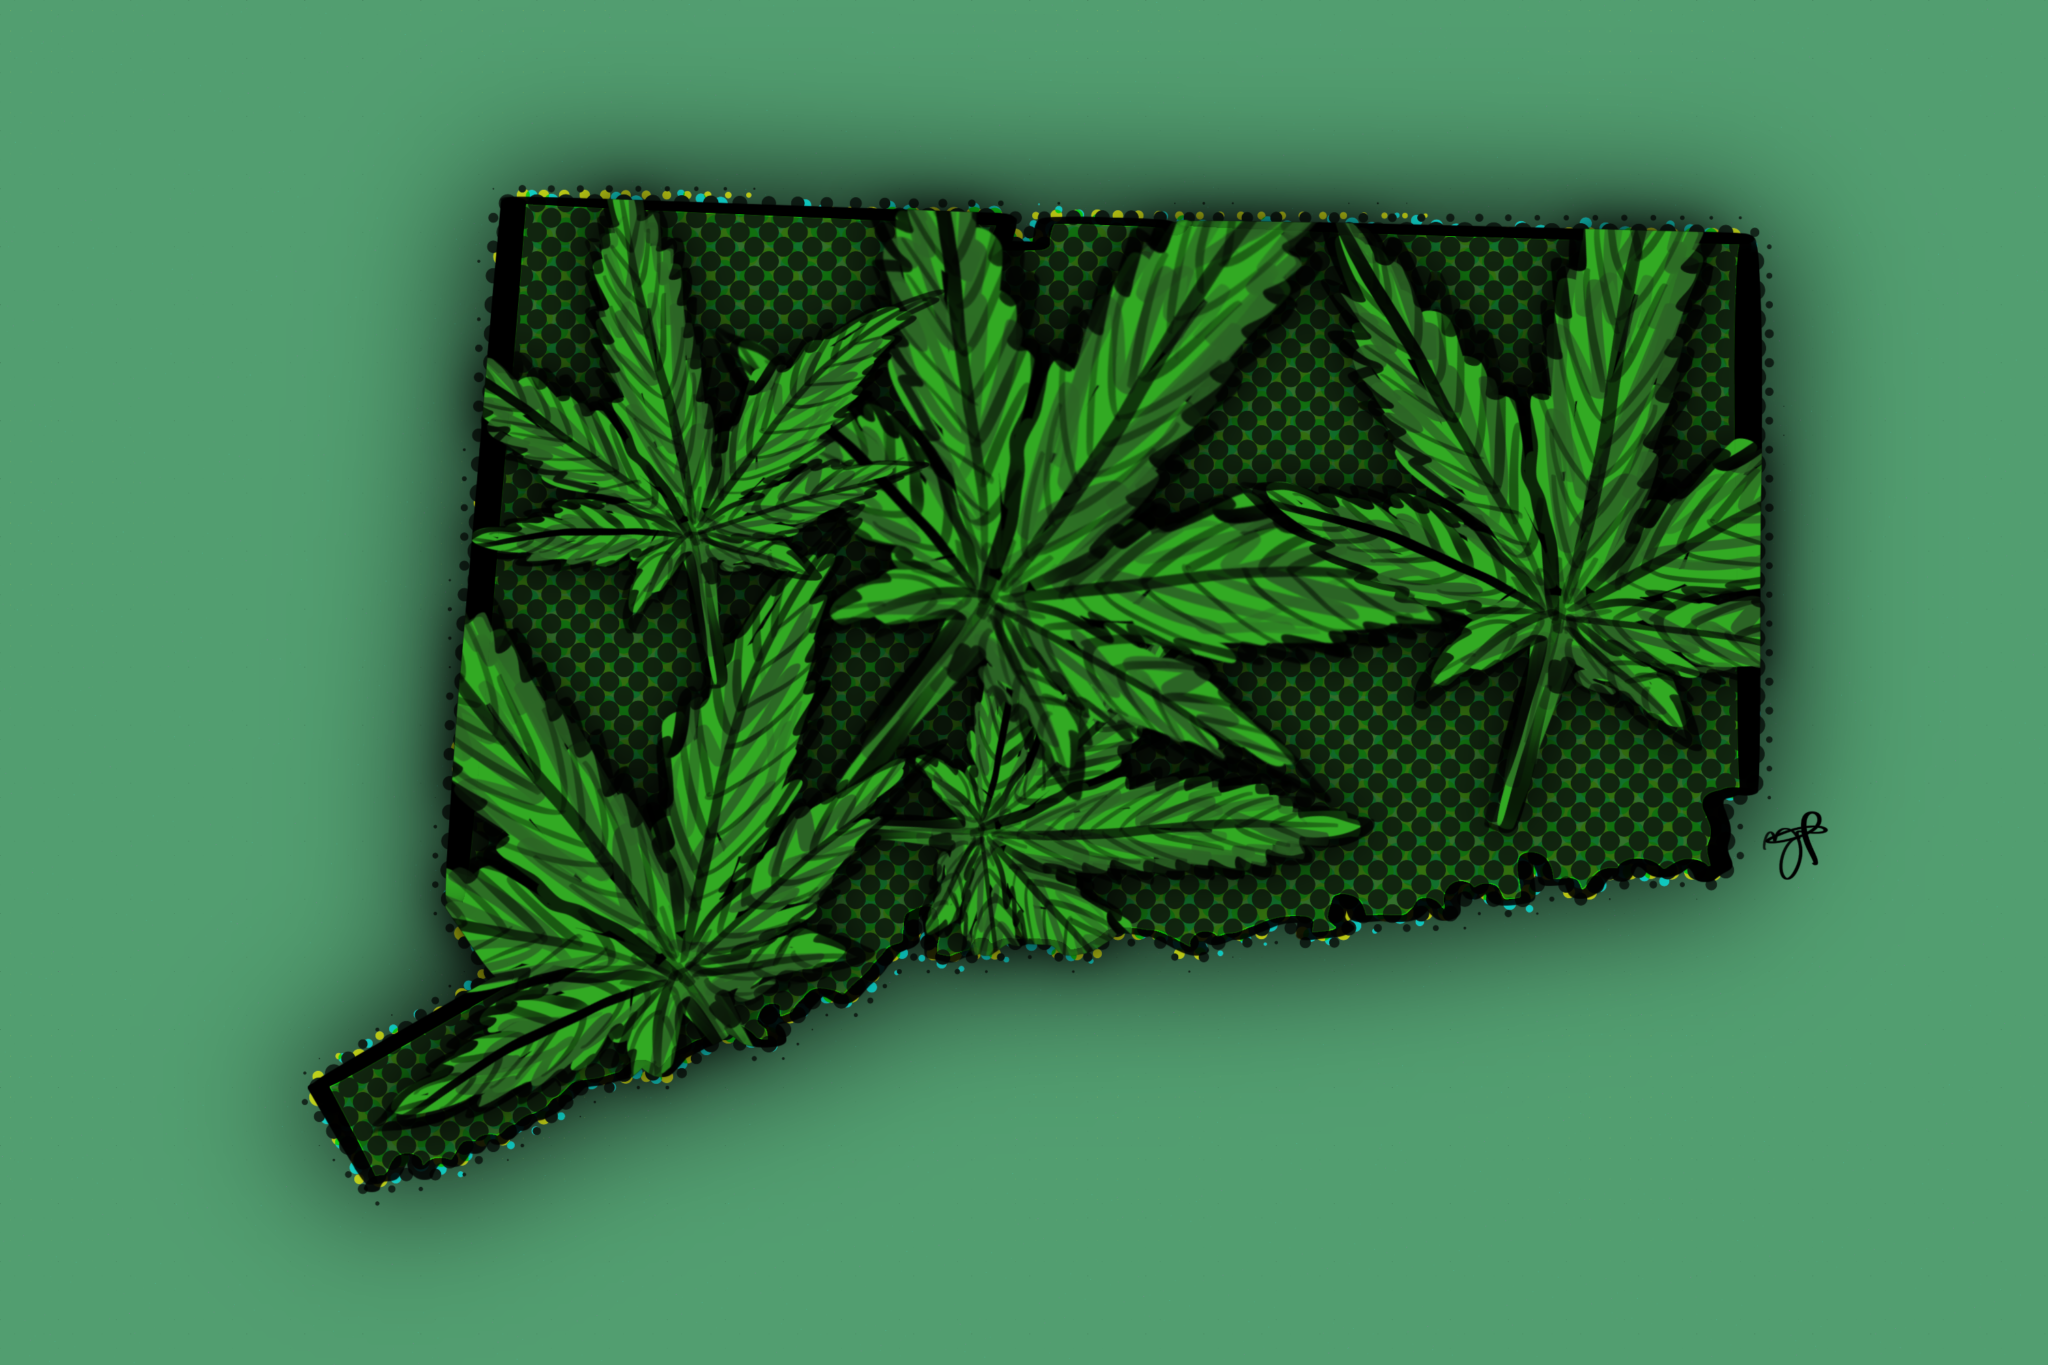 Large majority favors New Jersey marijuana legalization, according to poll  - Local News - pressofatlanticcity.com